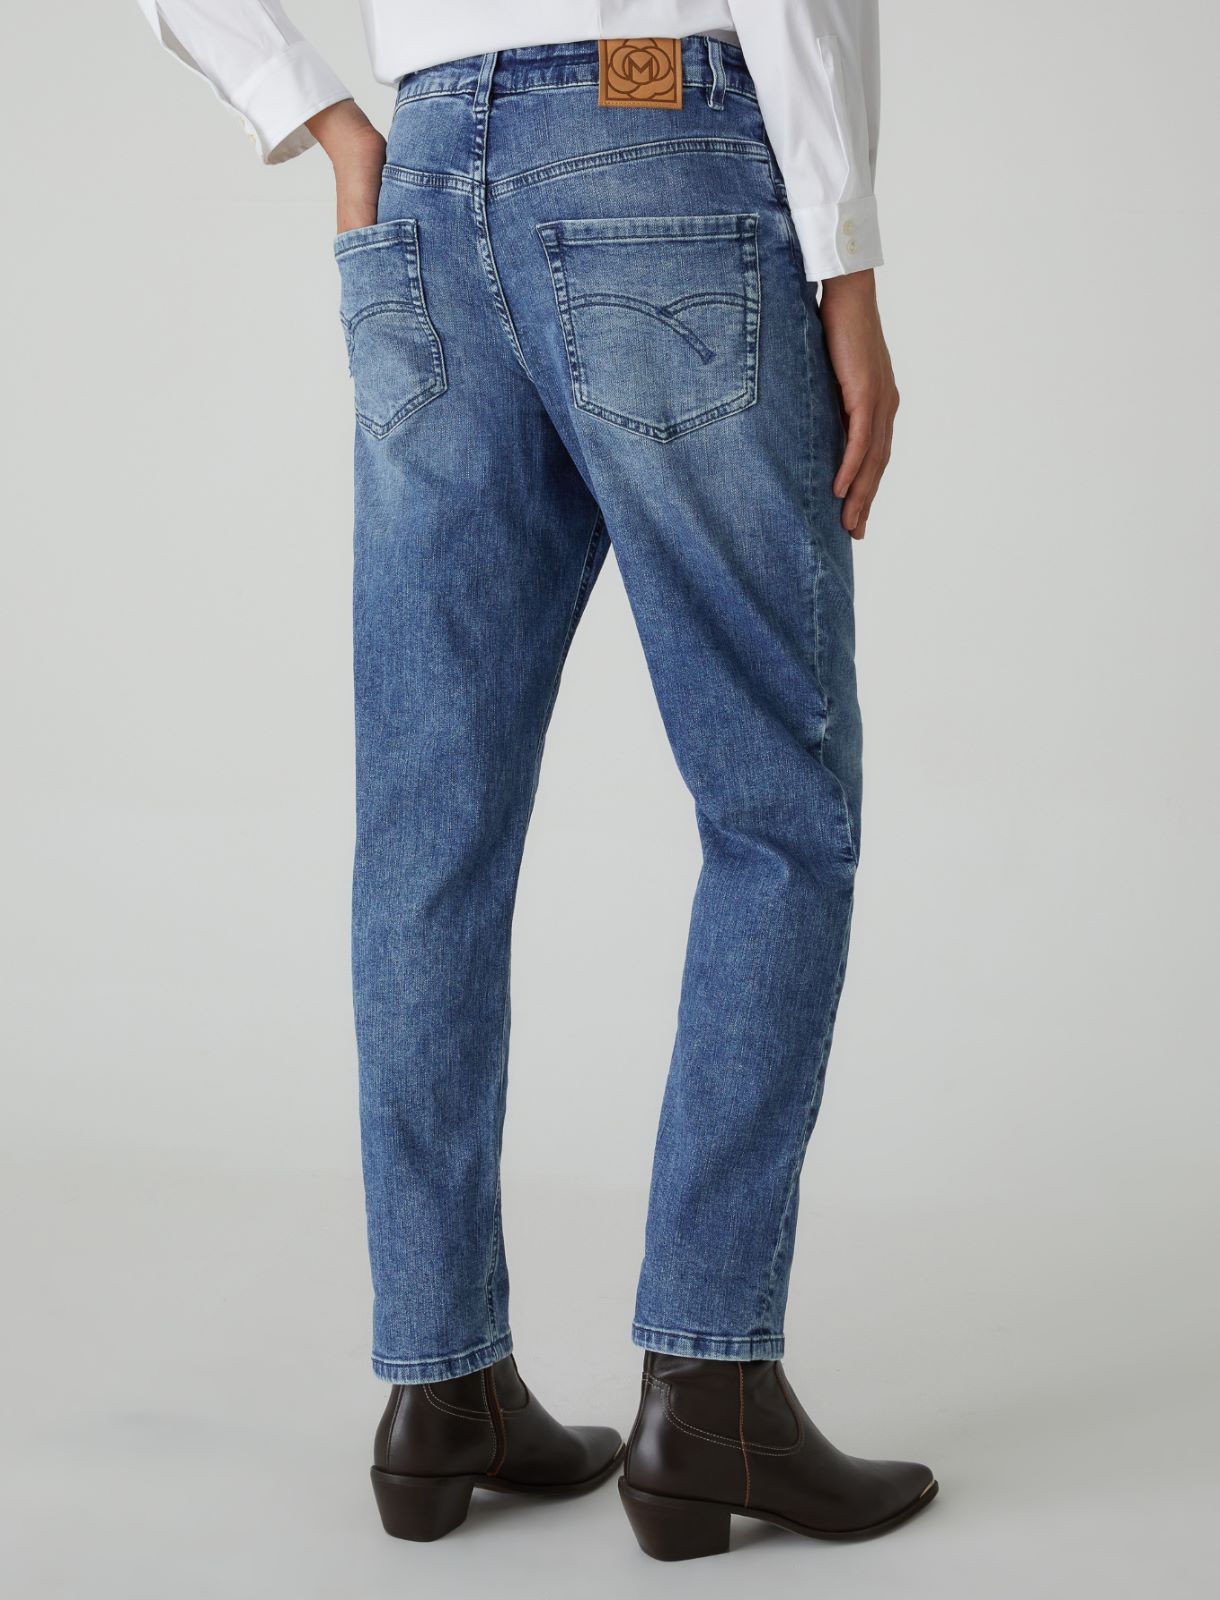 Tomboy jeans - Blue jeans - Marella - 2